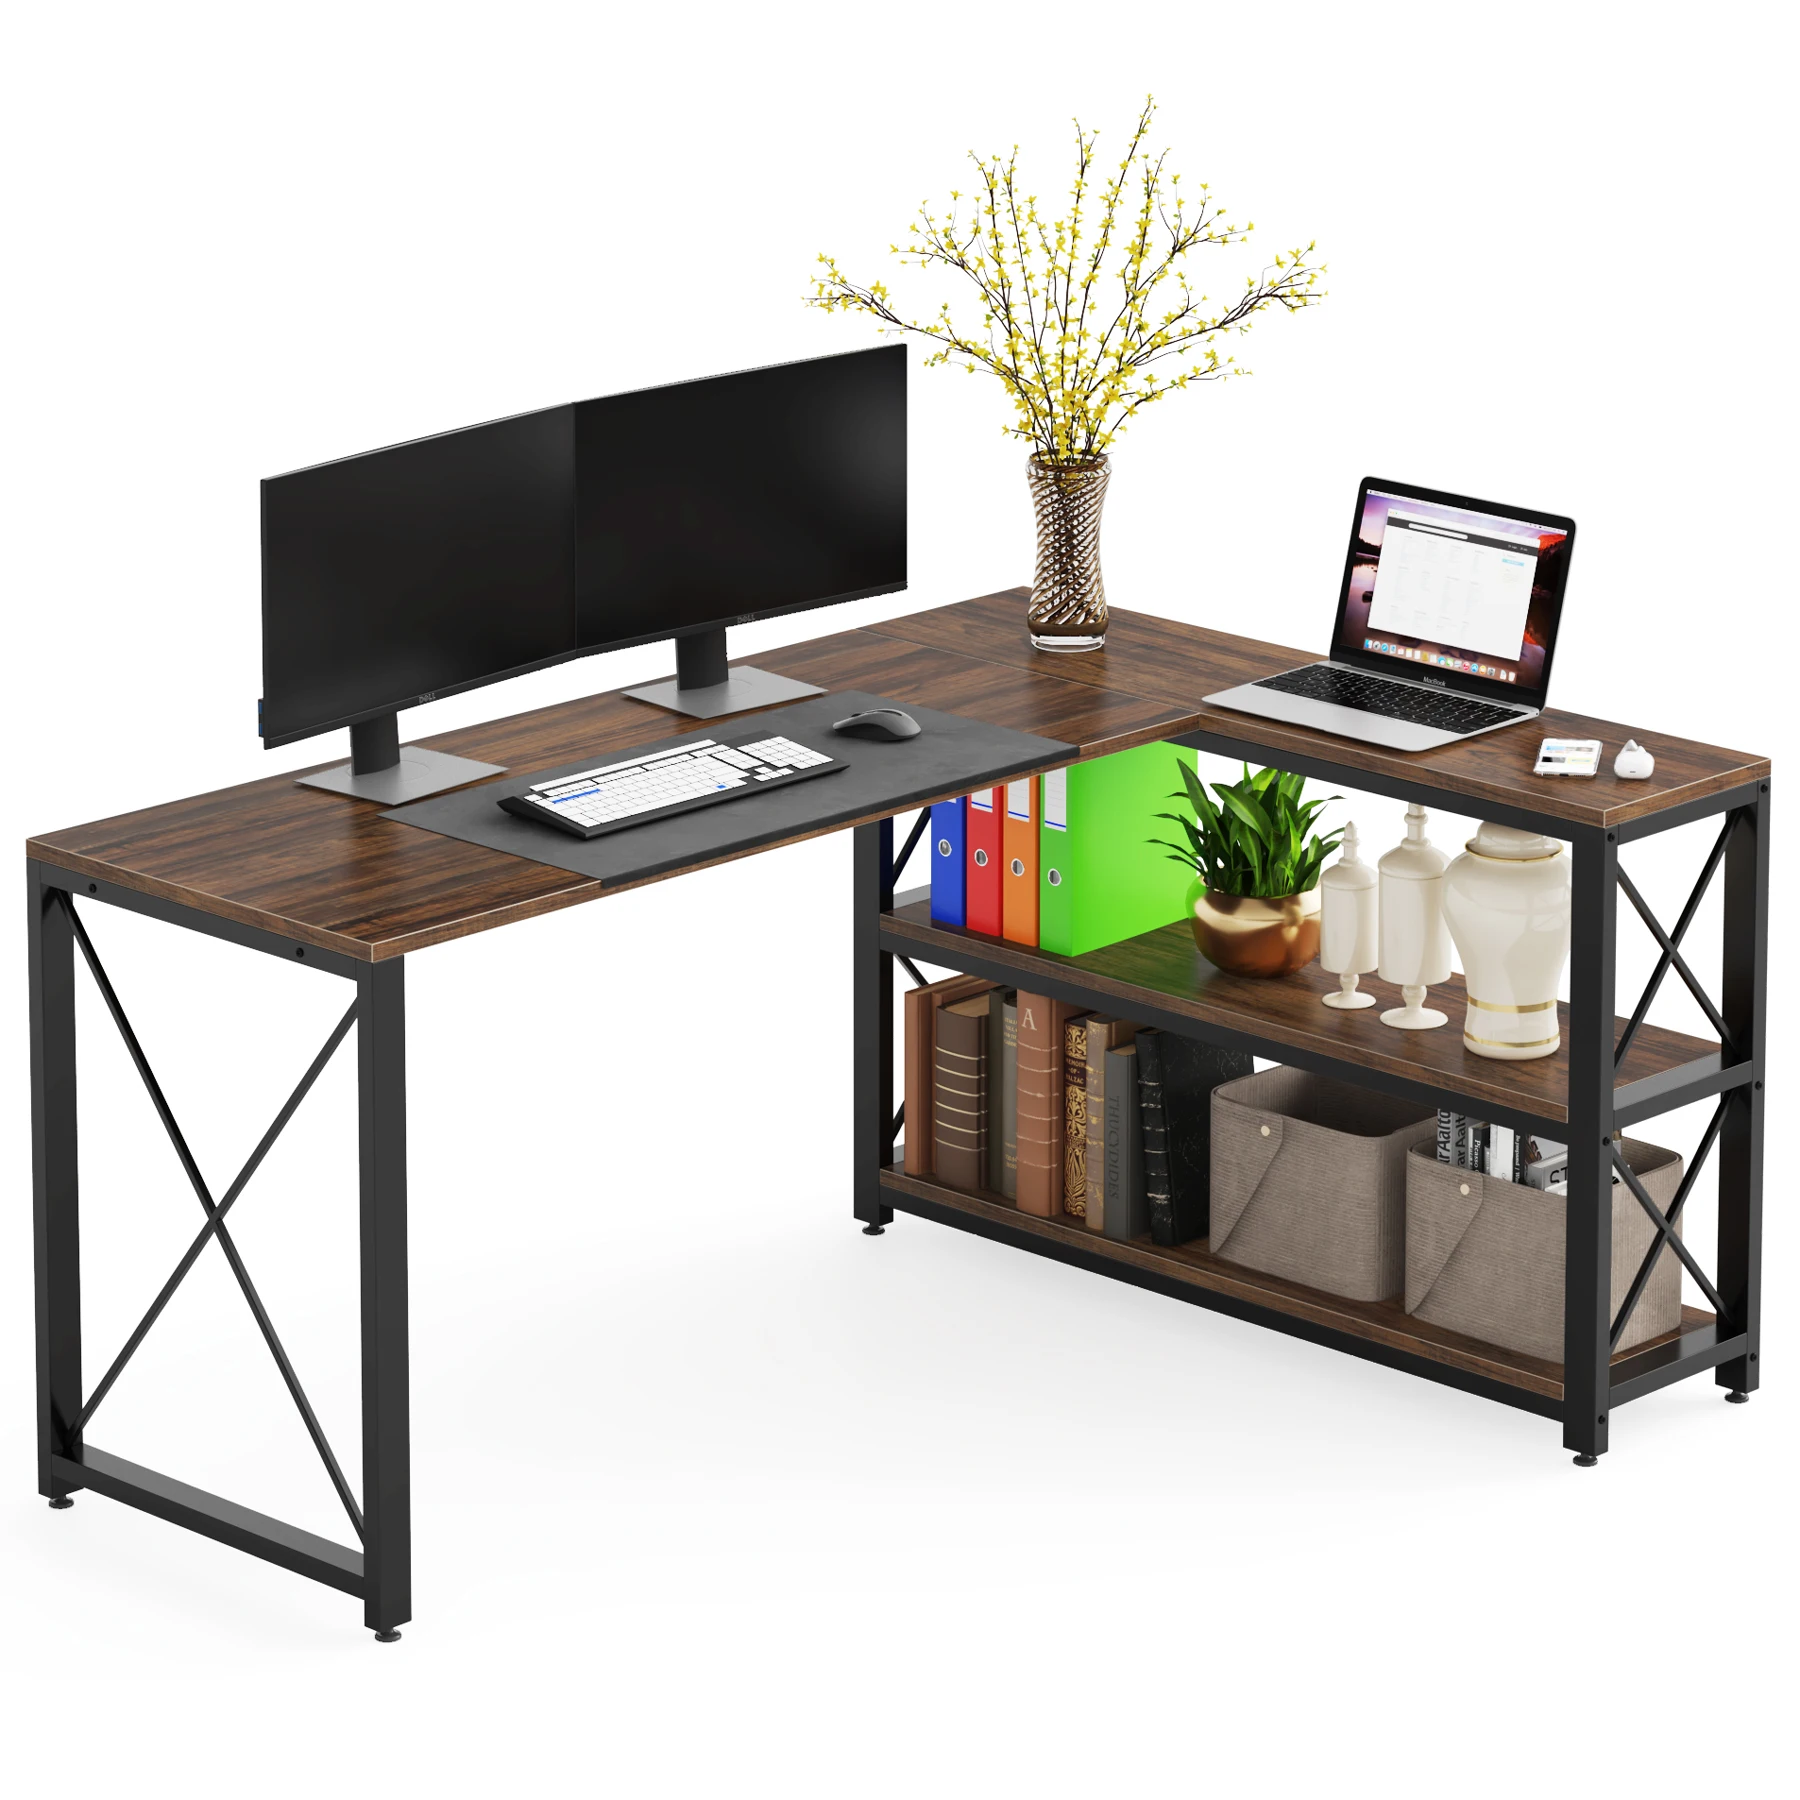 Gaming Desktop Home Study Office Games Desks Table For Household Simple Study Corner Computer Desk